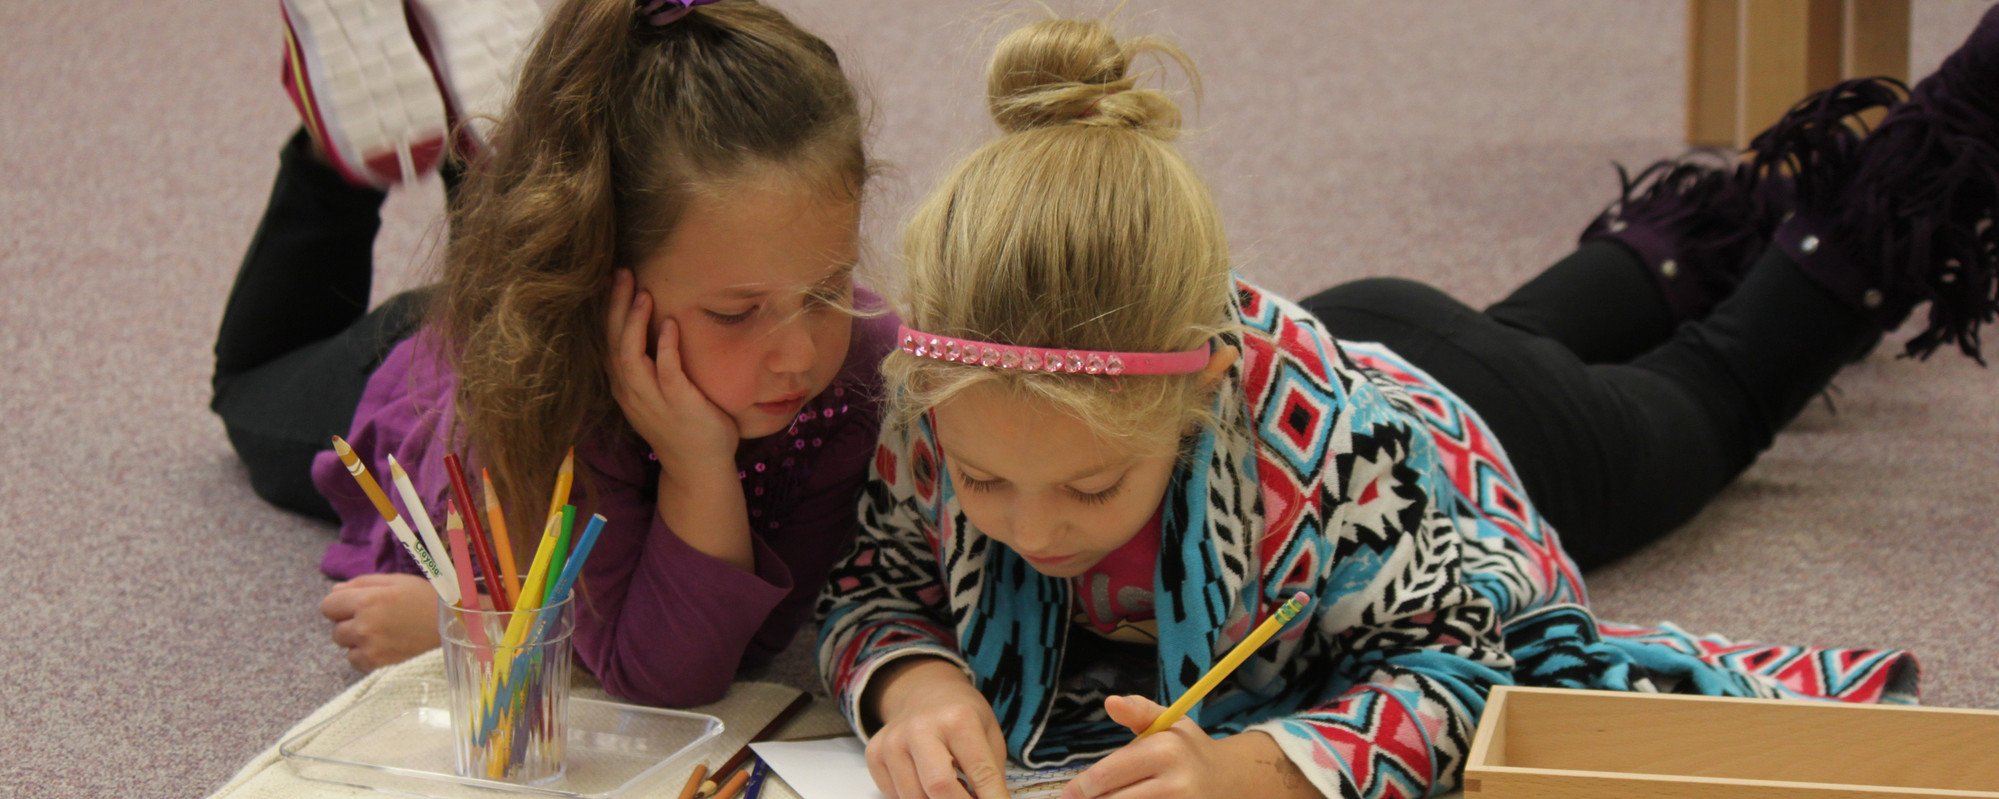 Montessori - Students drawing